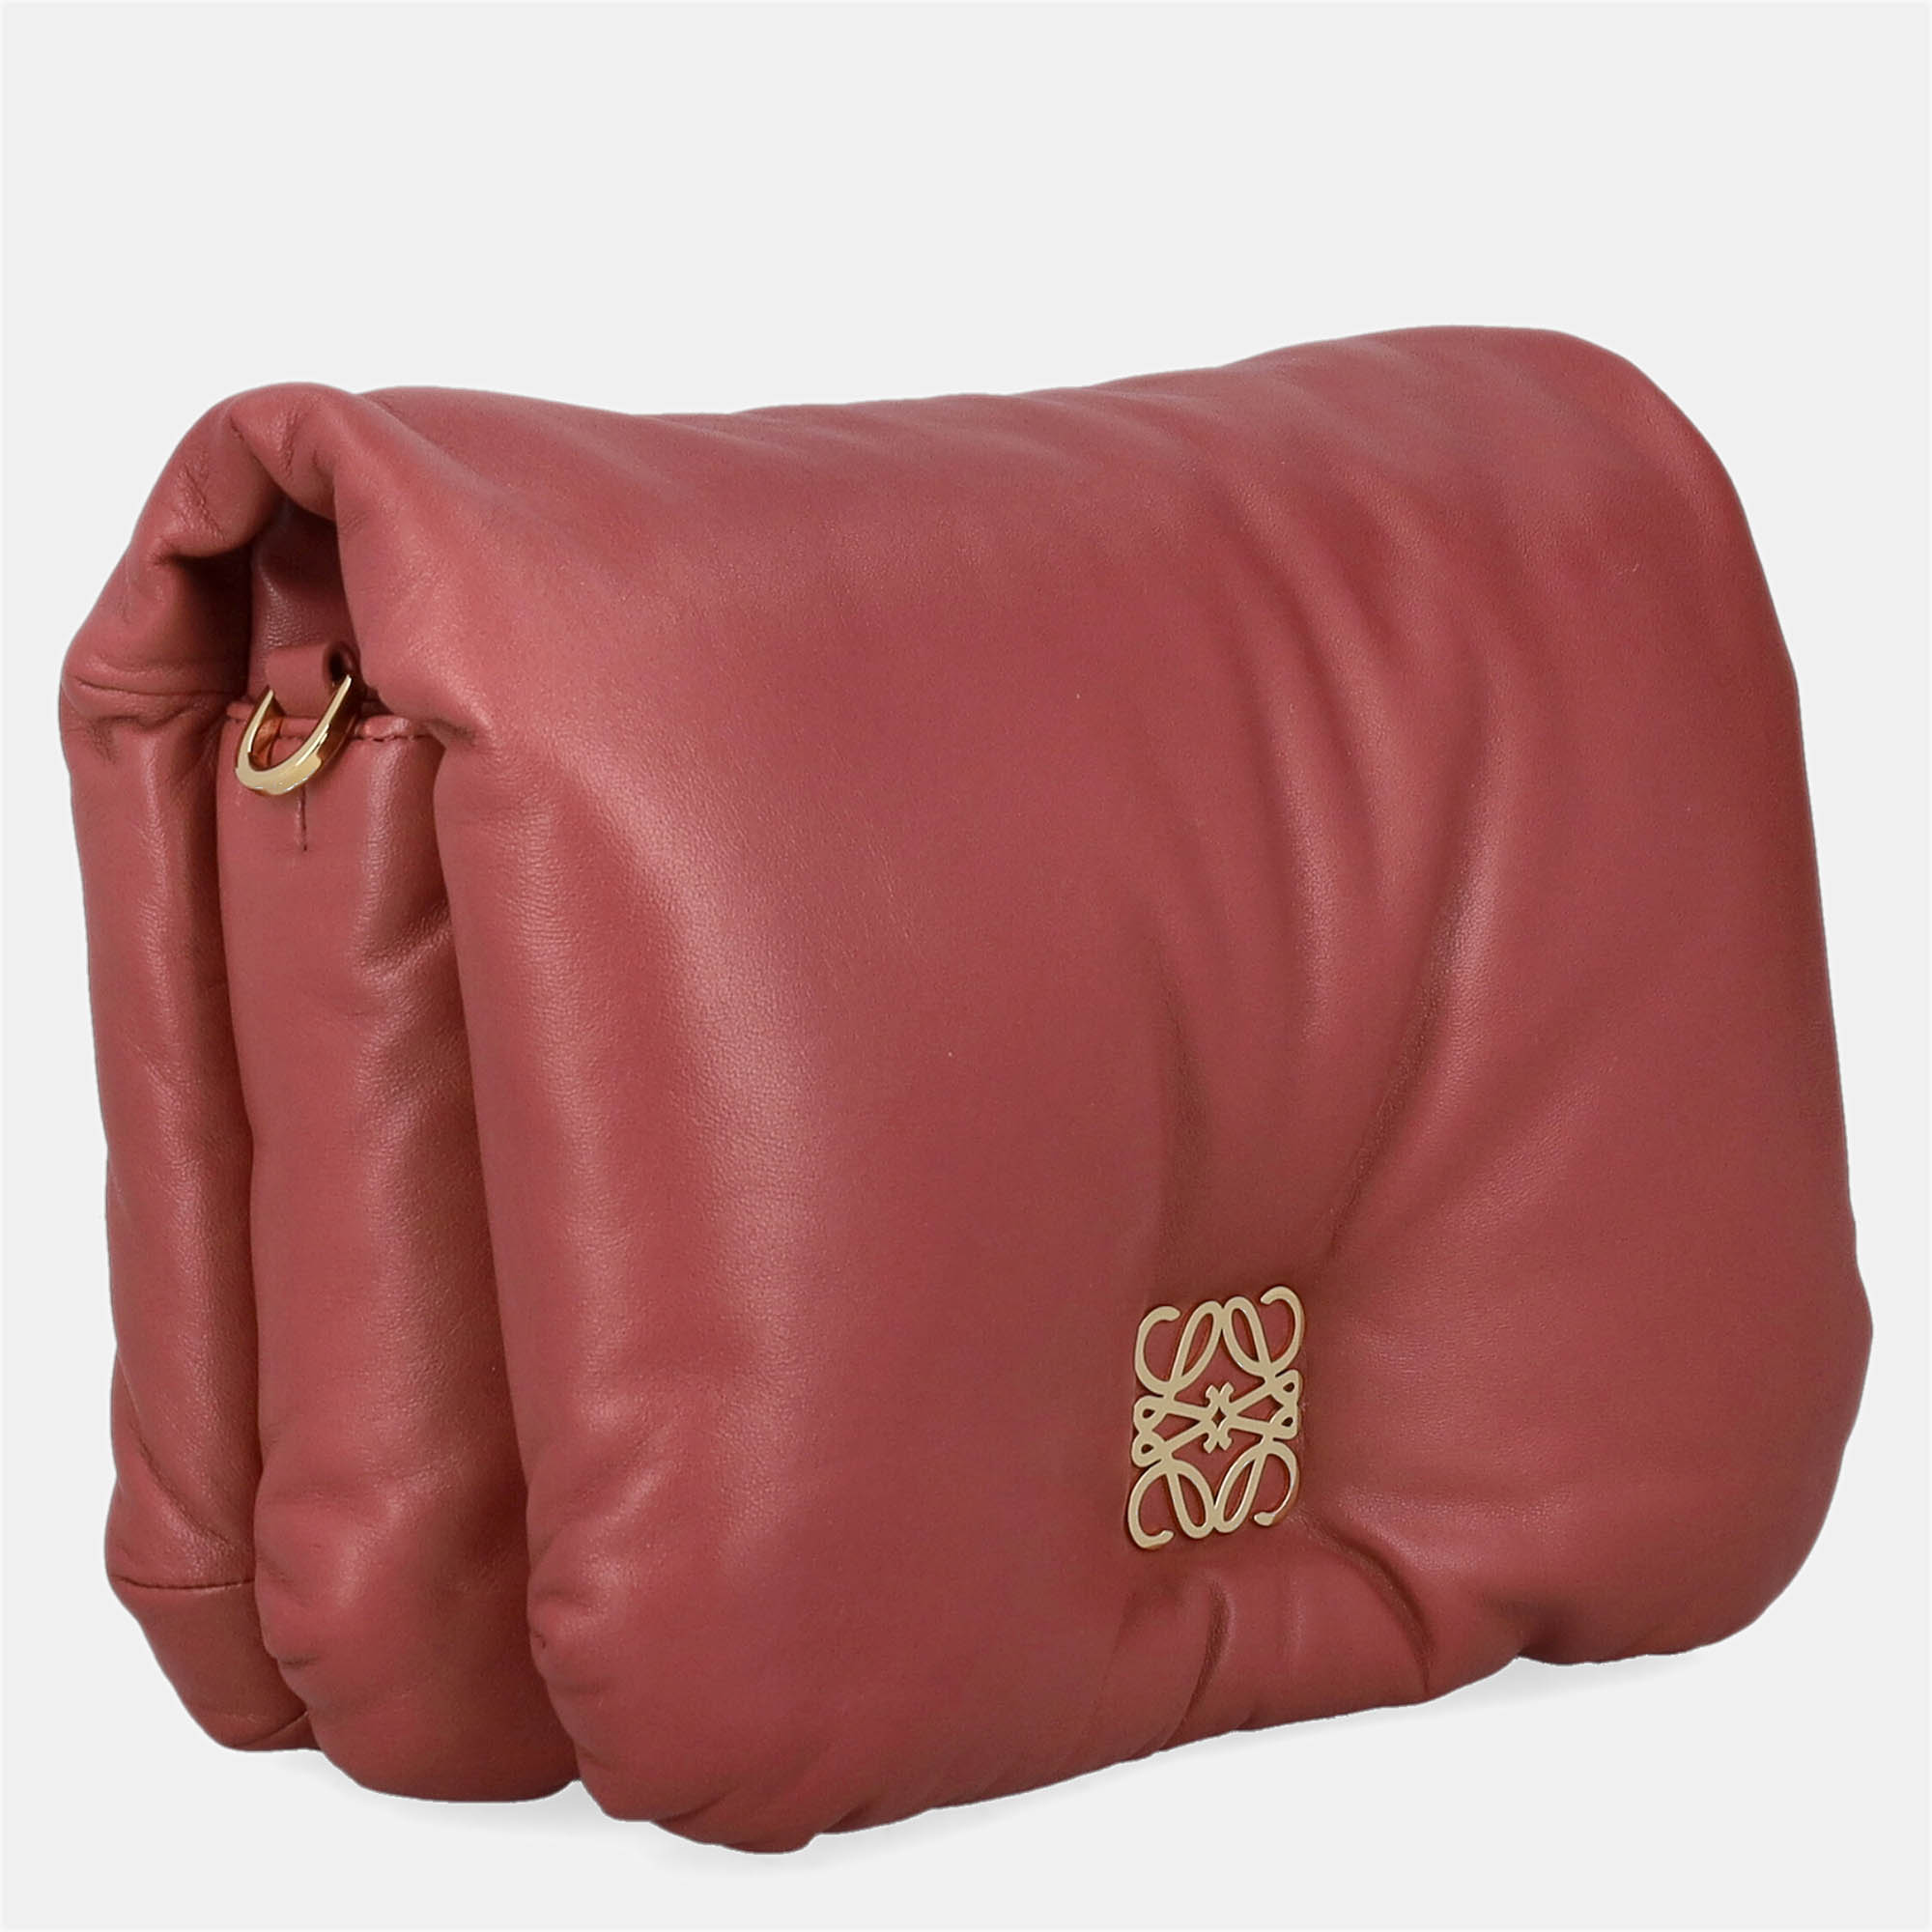 Loewe Women's Leather Cross Body Bag - Pink - One Size